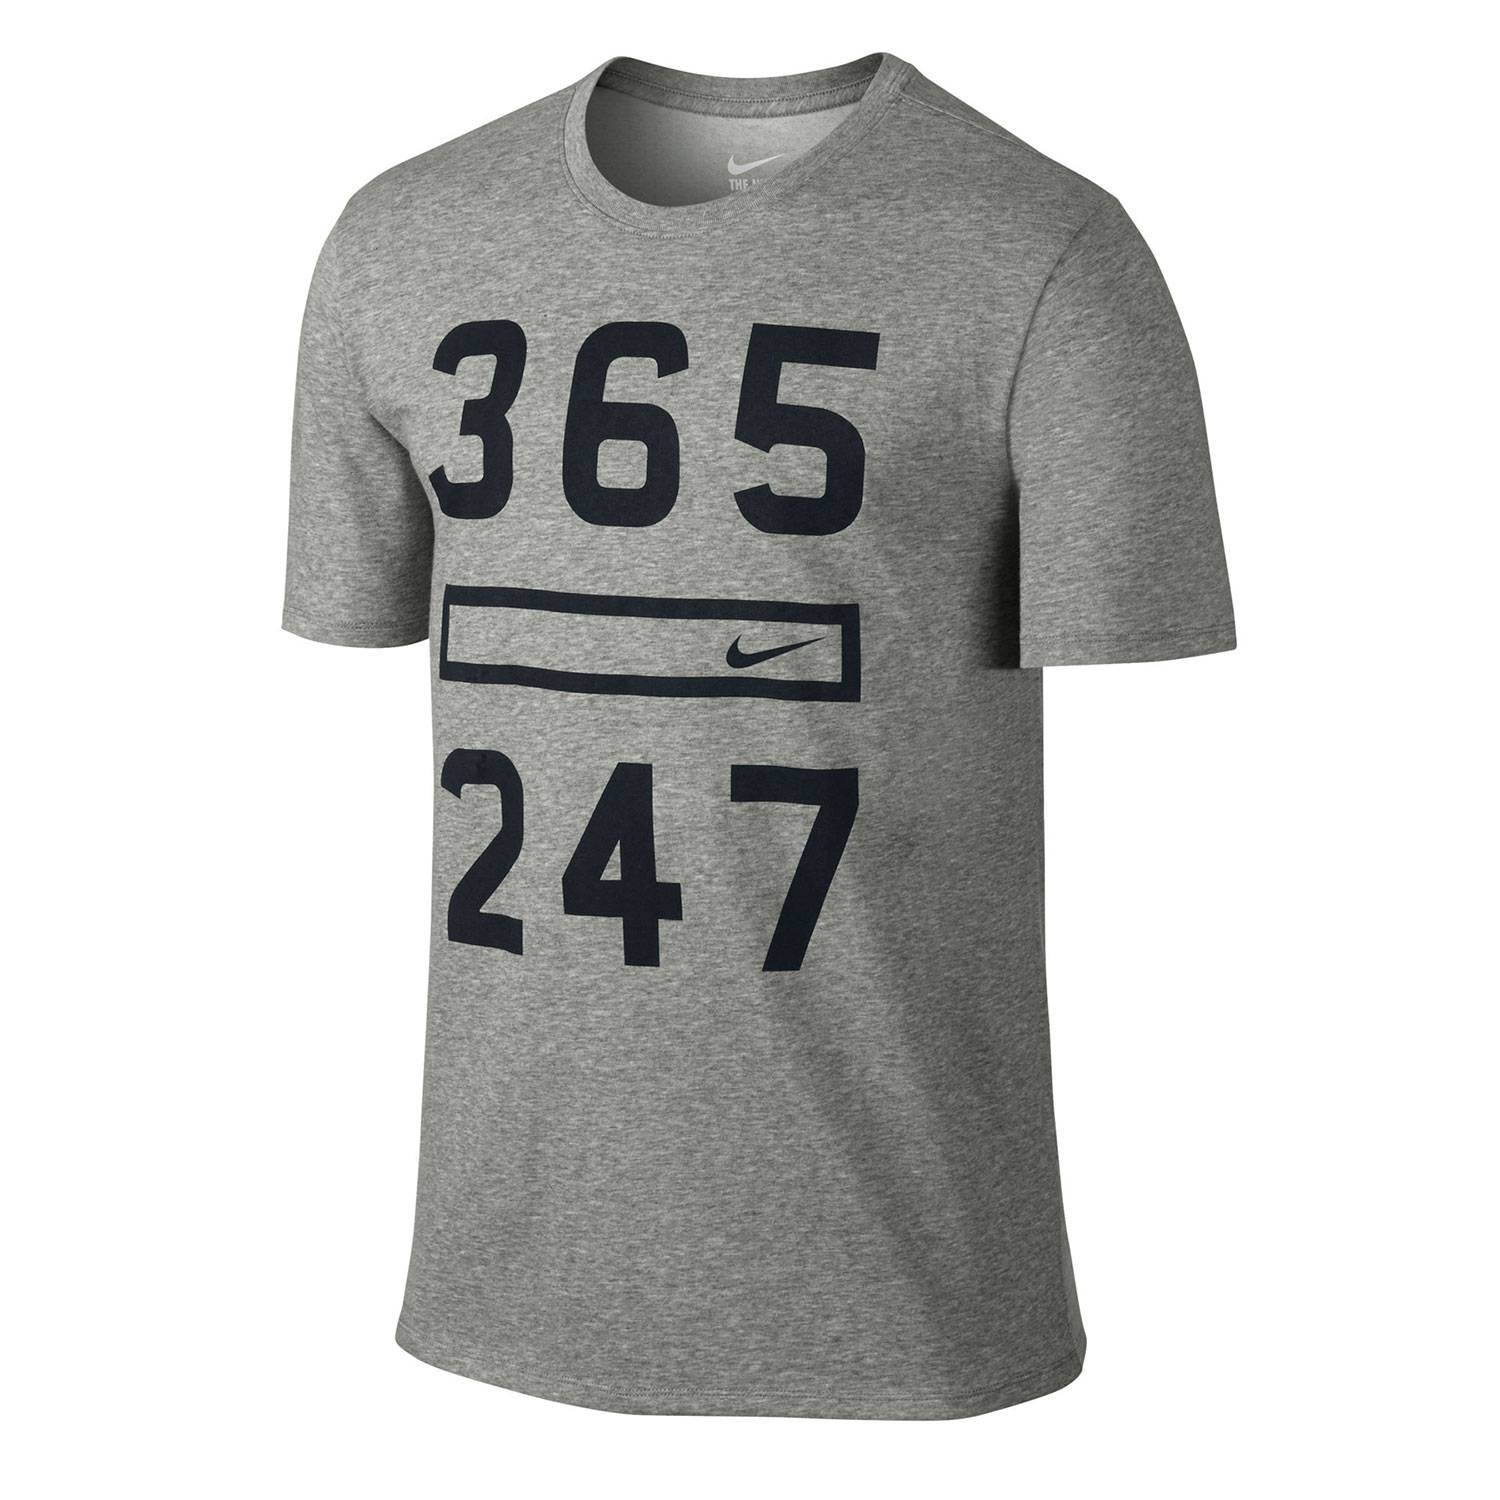 Nike Men s 365 24 7 T Shirt